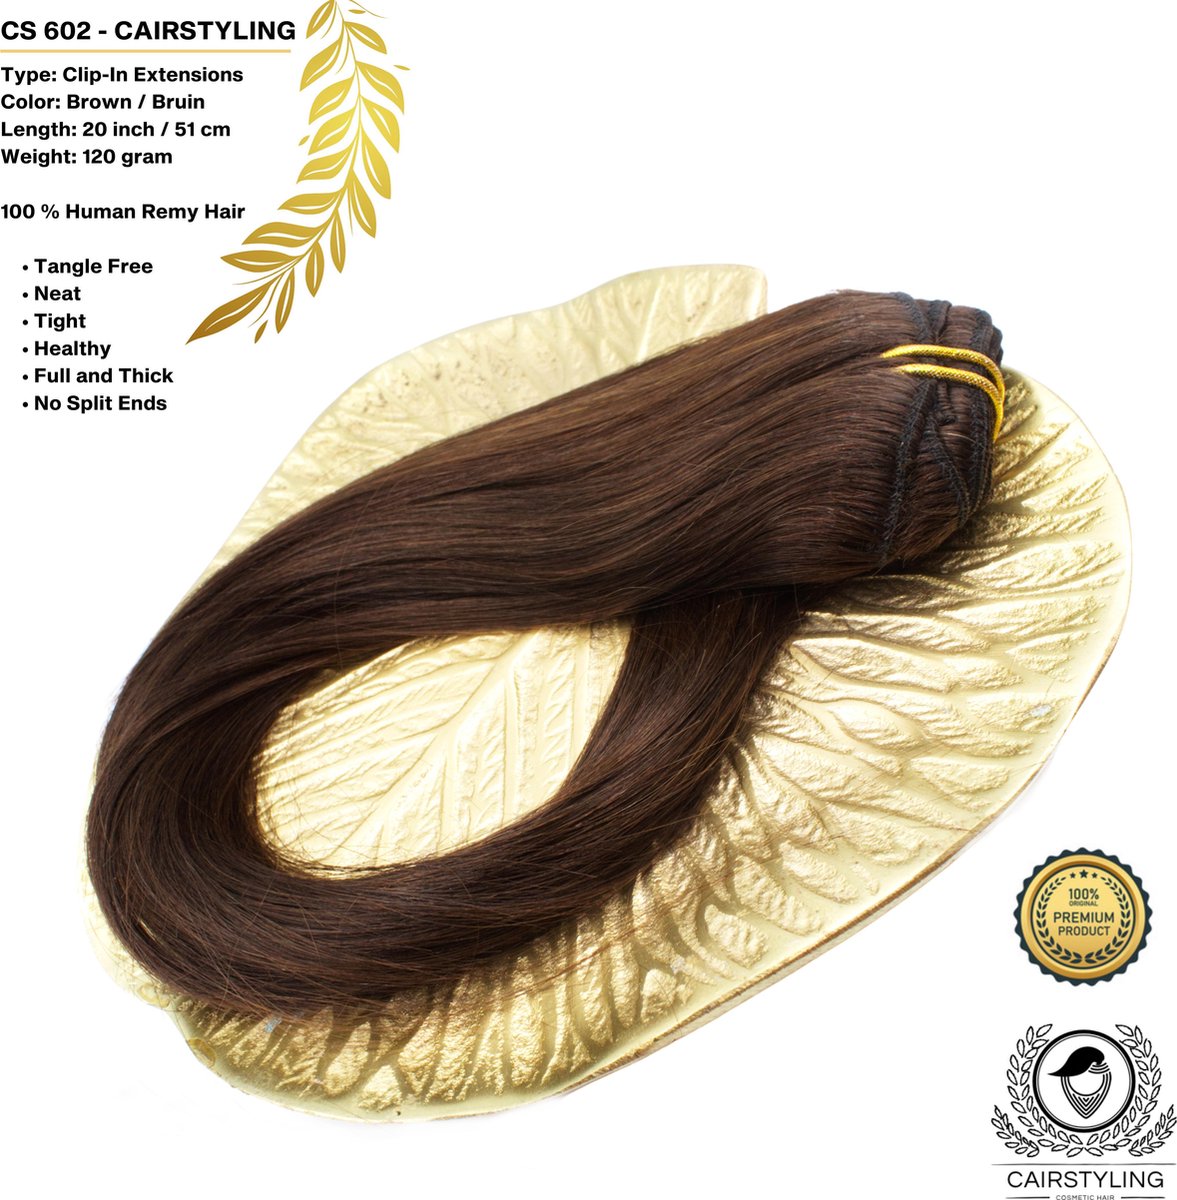 CAIRSTYLING Premium 100% Human Hair - CS602 CLIP-IN - Super Double Remy Human Hair Extensions | 120 Gram | 51 CM (20 inch) | Haarverlenging | Best Quality Hair Long-term Use | Natuurlijk Haar Volume